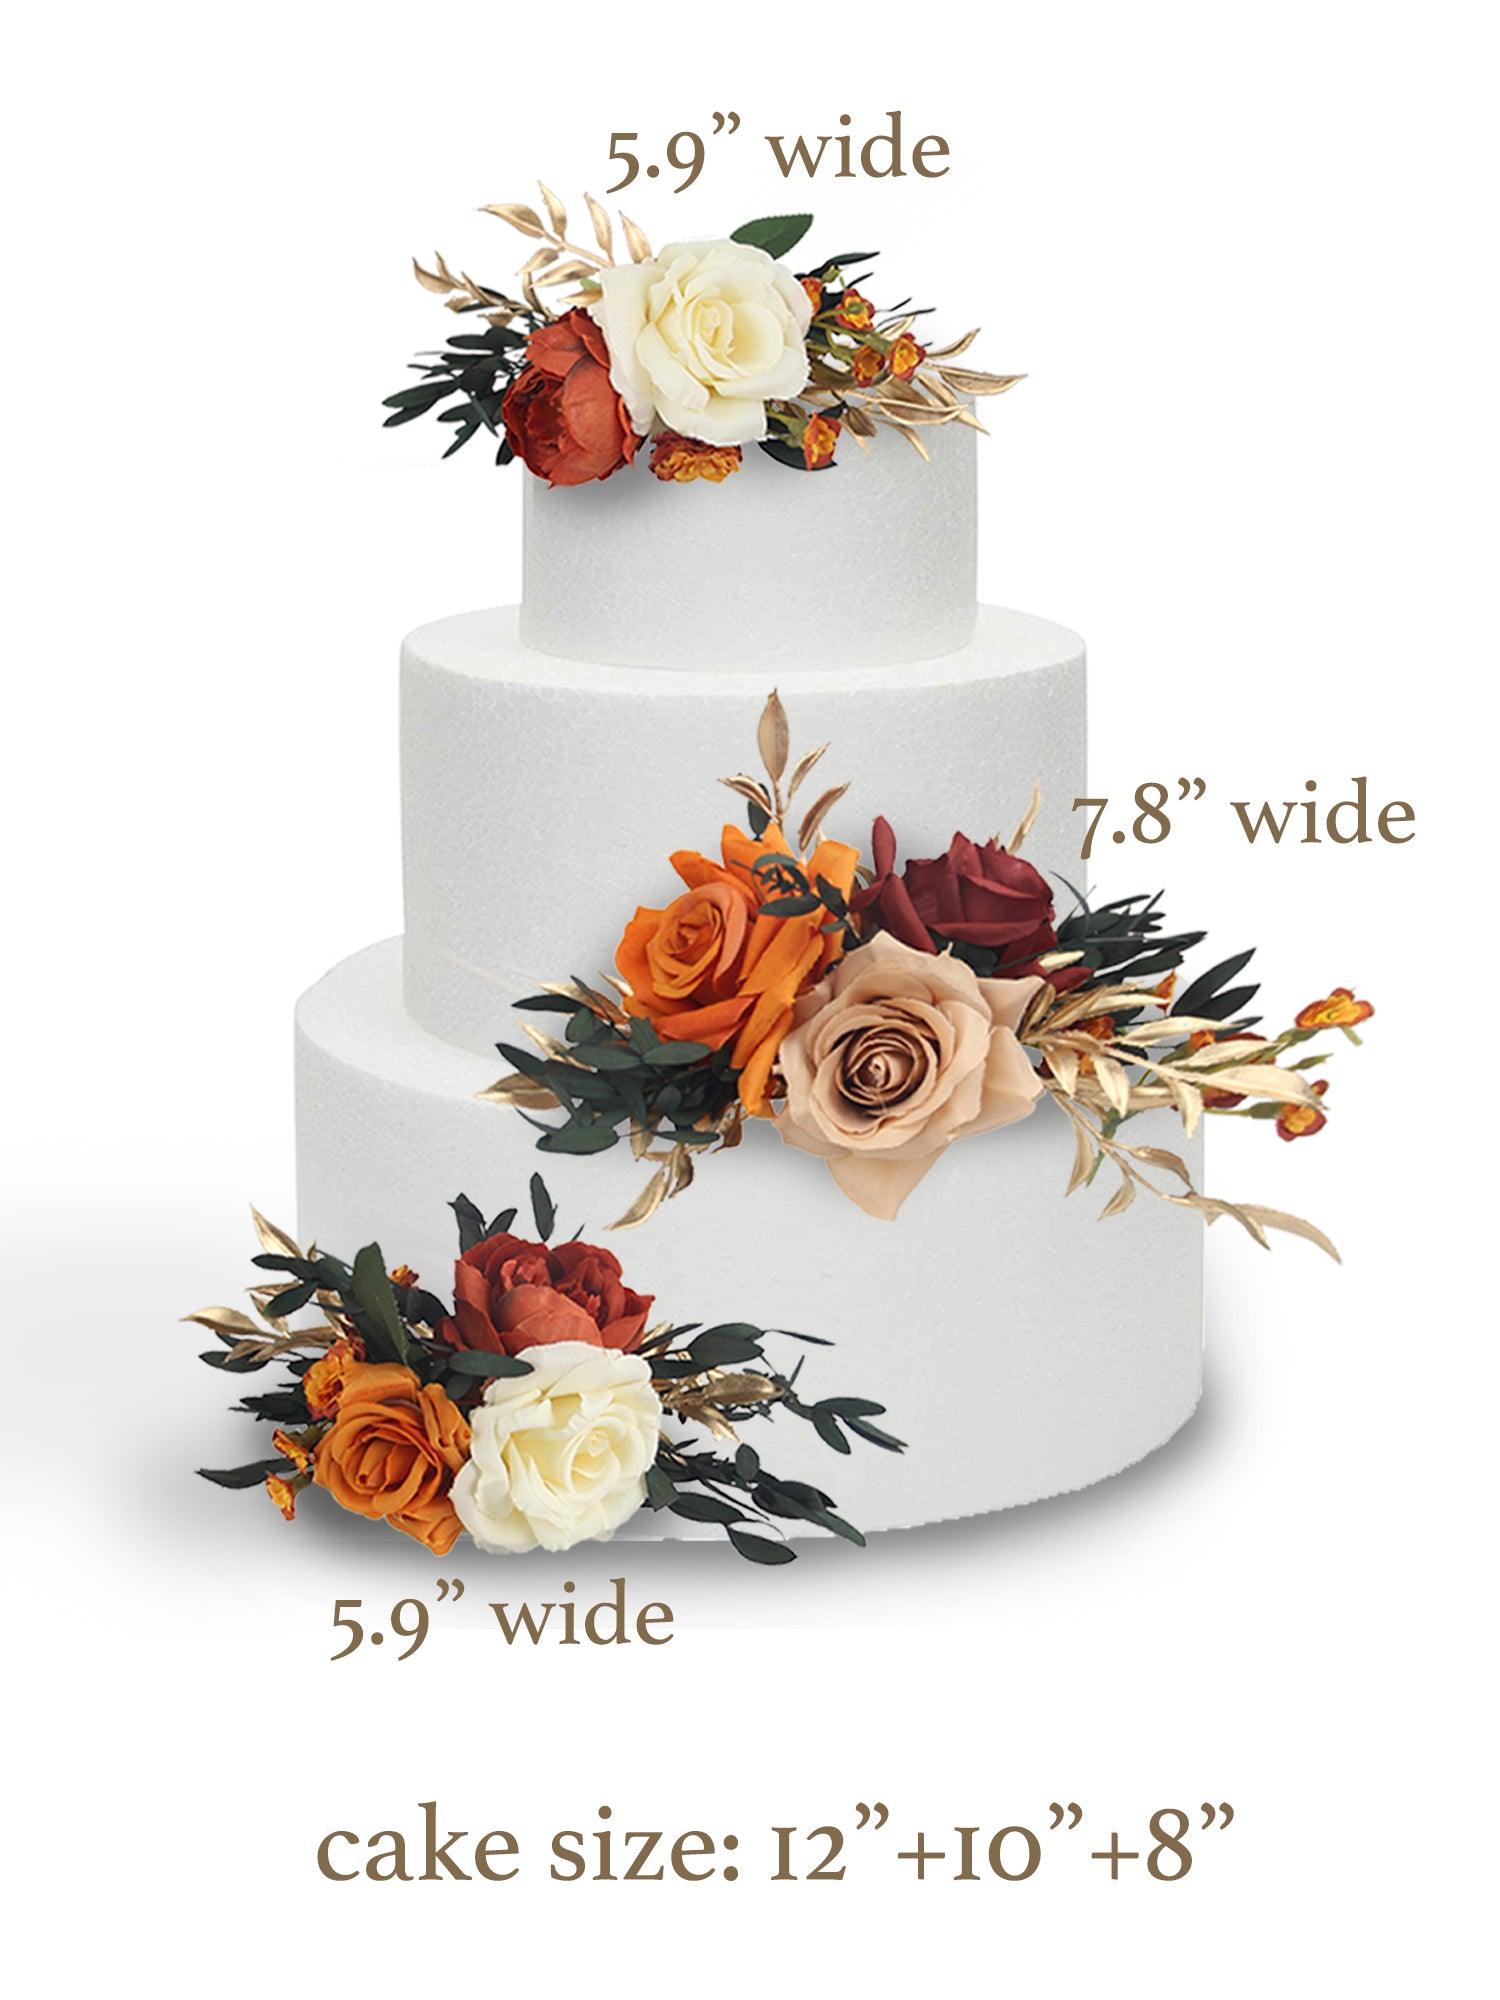 Black Roses edible cake decorations wedding birthday anniiversary flowers